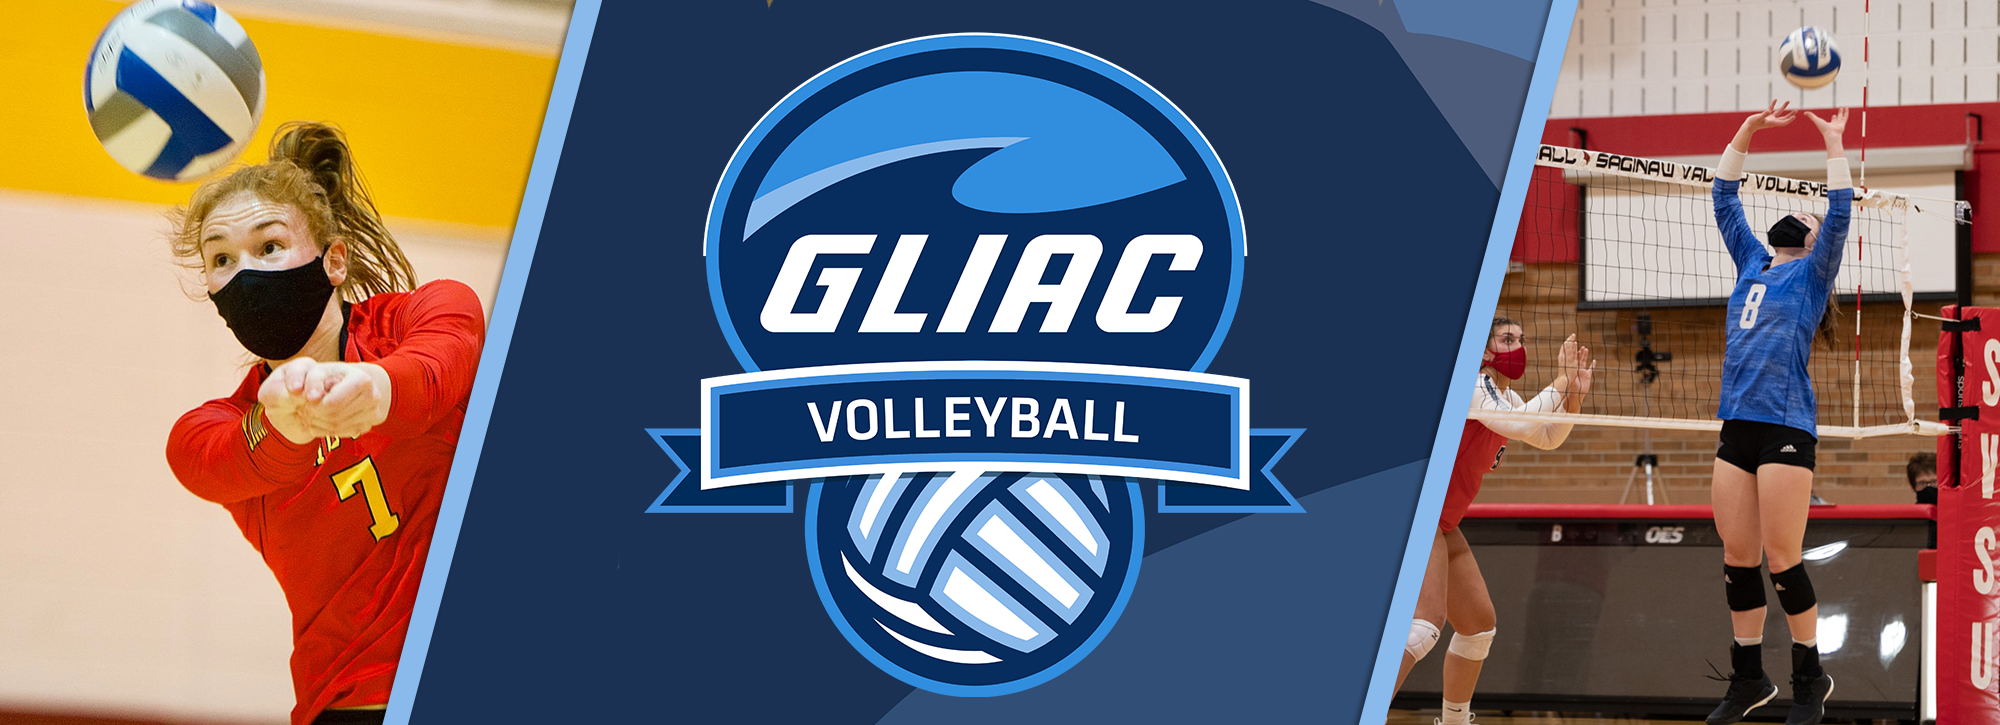 FSU's O'Connell, GVSU's Jacquay Claim GLIAC Volleyball Players of the Week